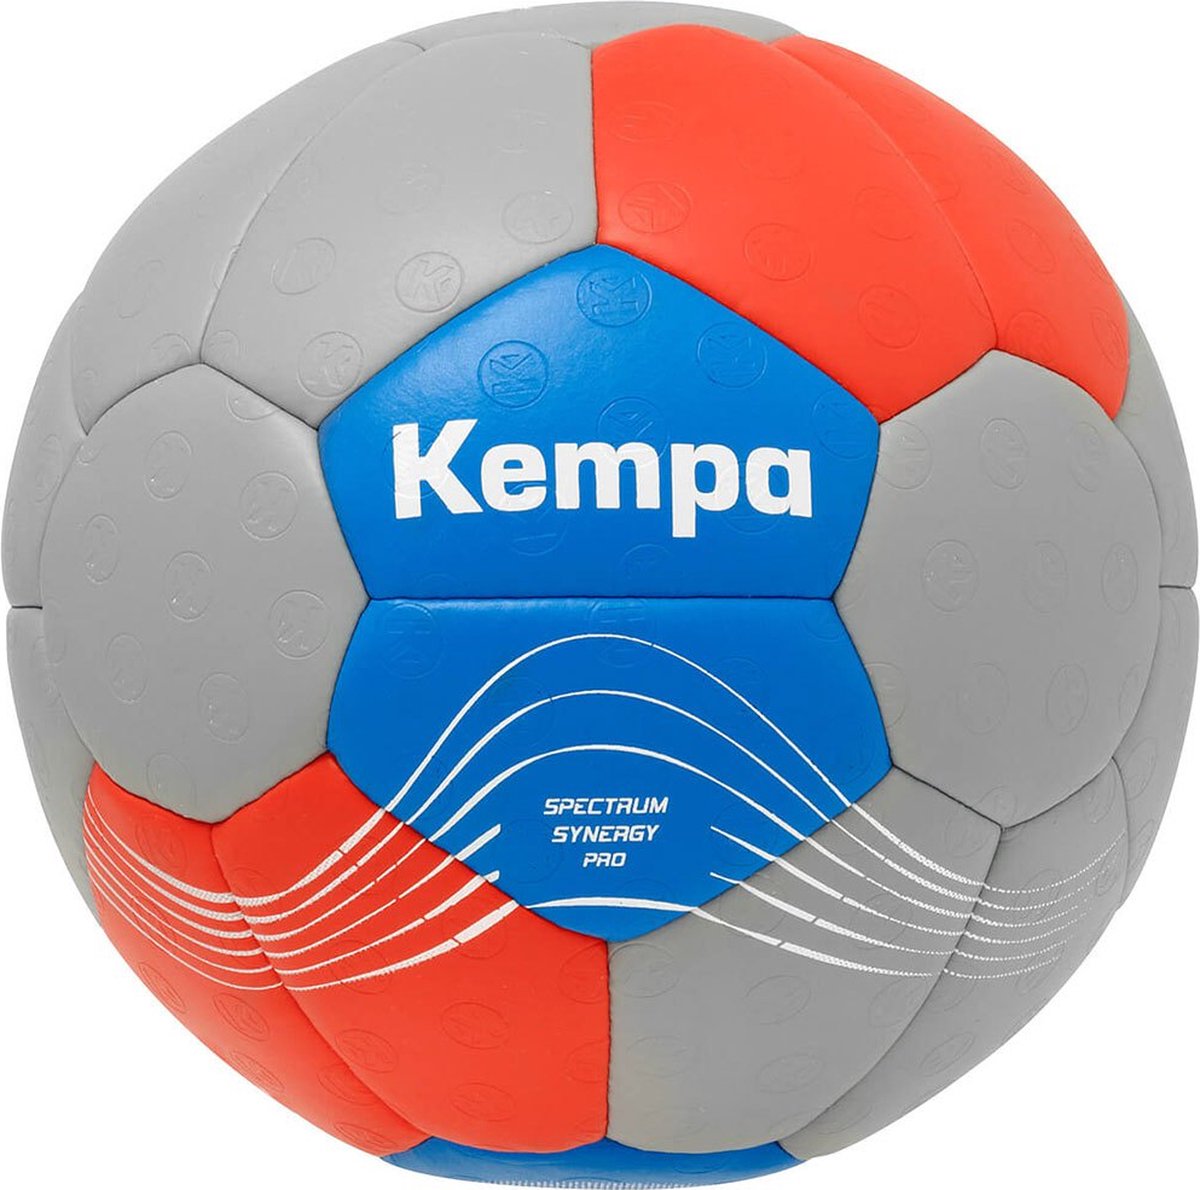 KEMPA Spectrum Synergy Pro Handbal Maat - 2